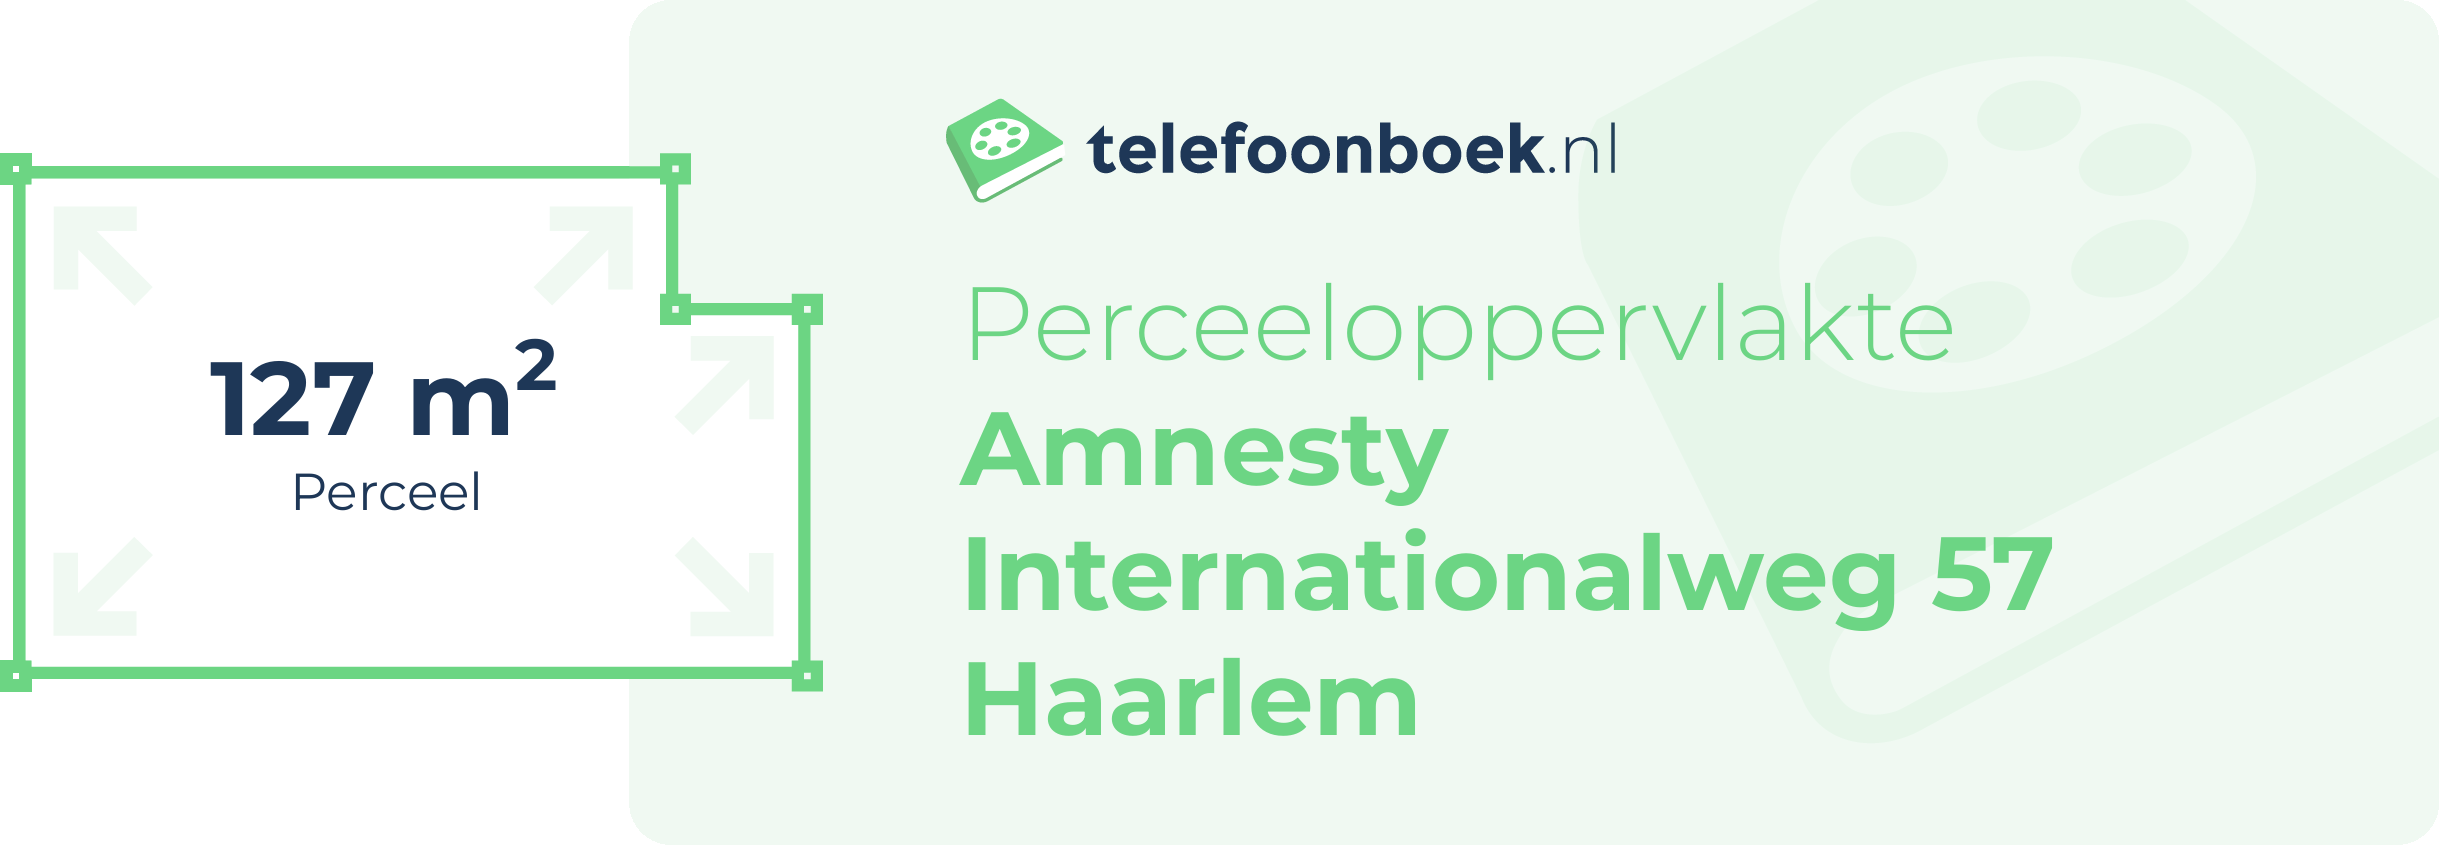 Perceeloppervlakte Amnesty Internationalweg 57 Haarlem